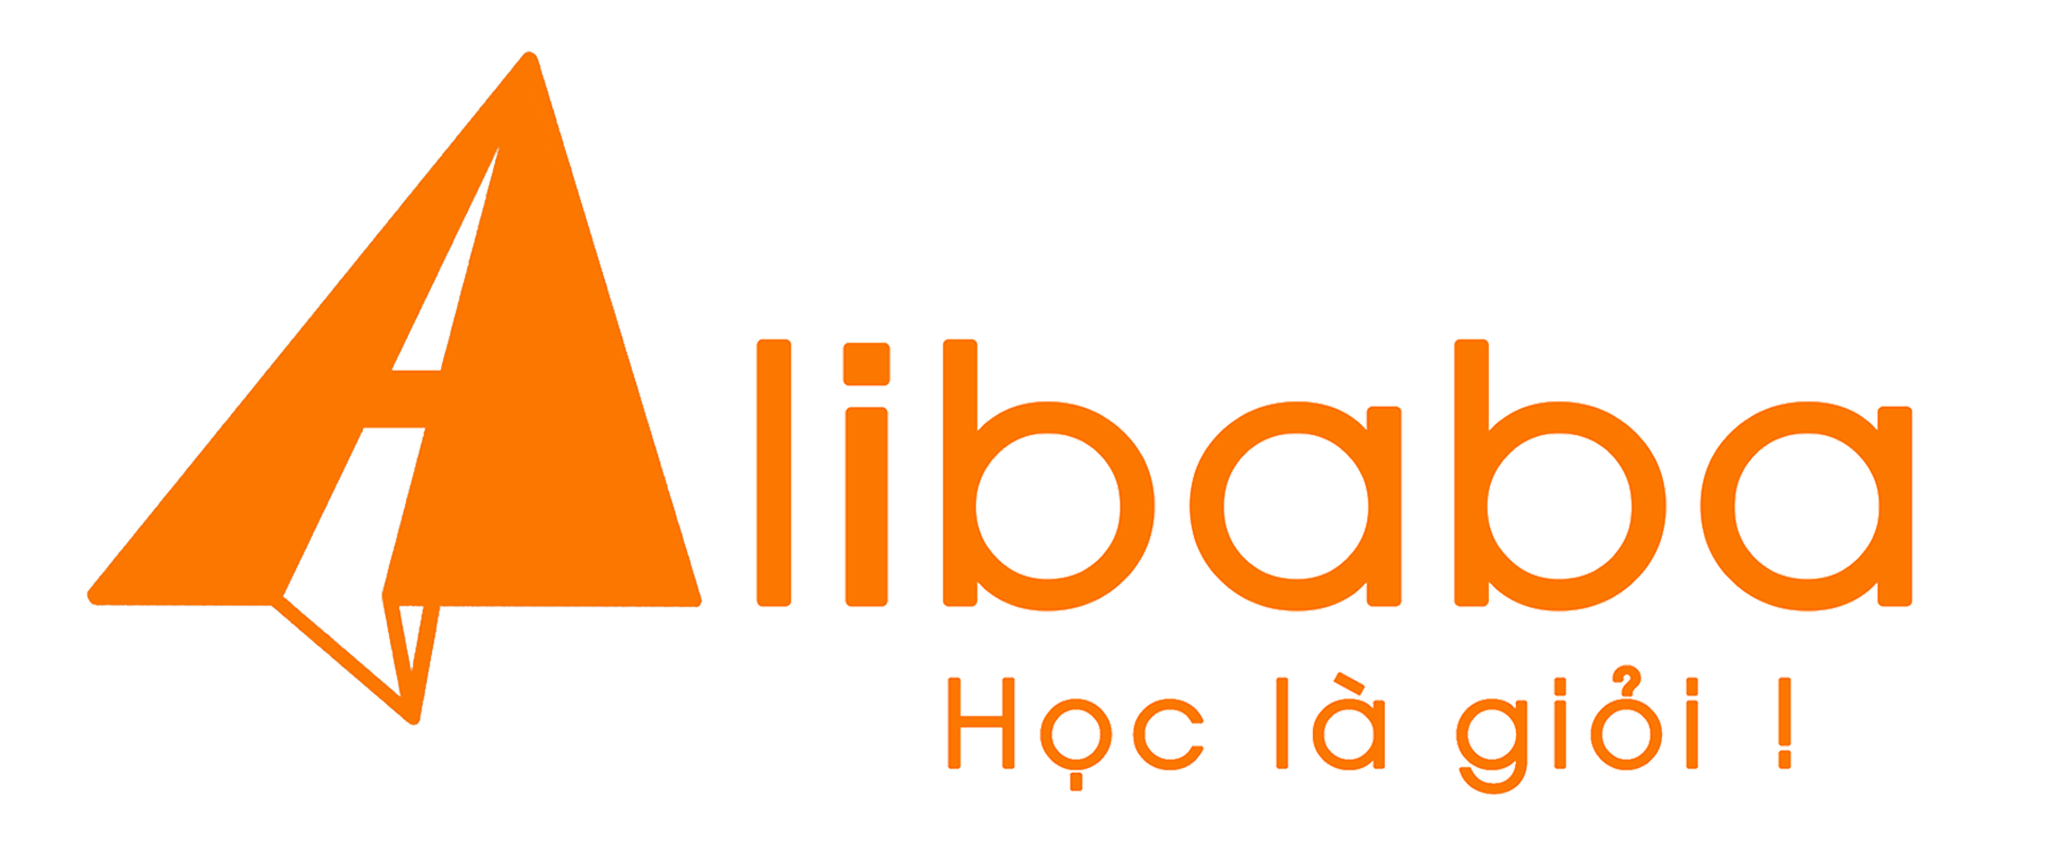 Logo Alibaba English